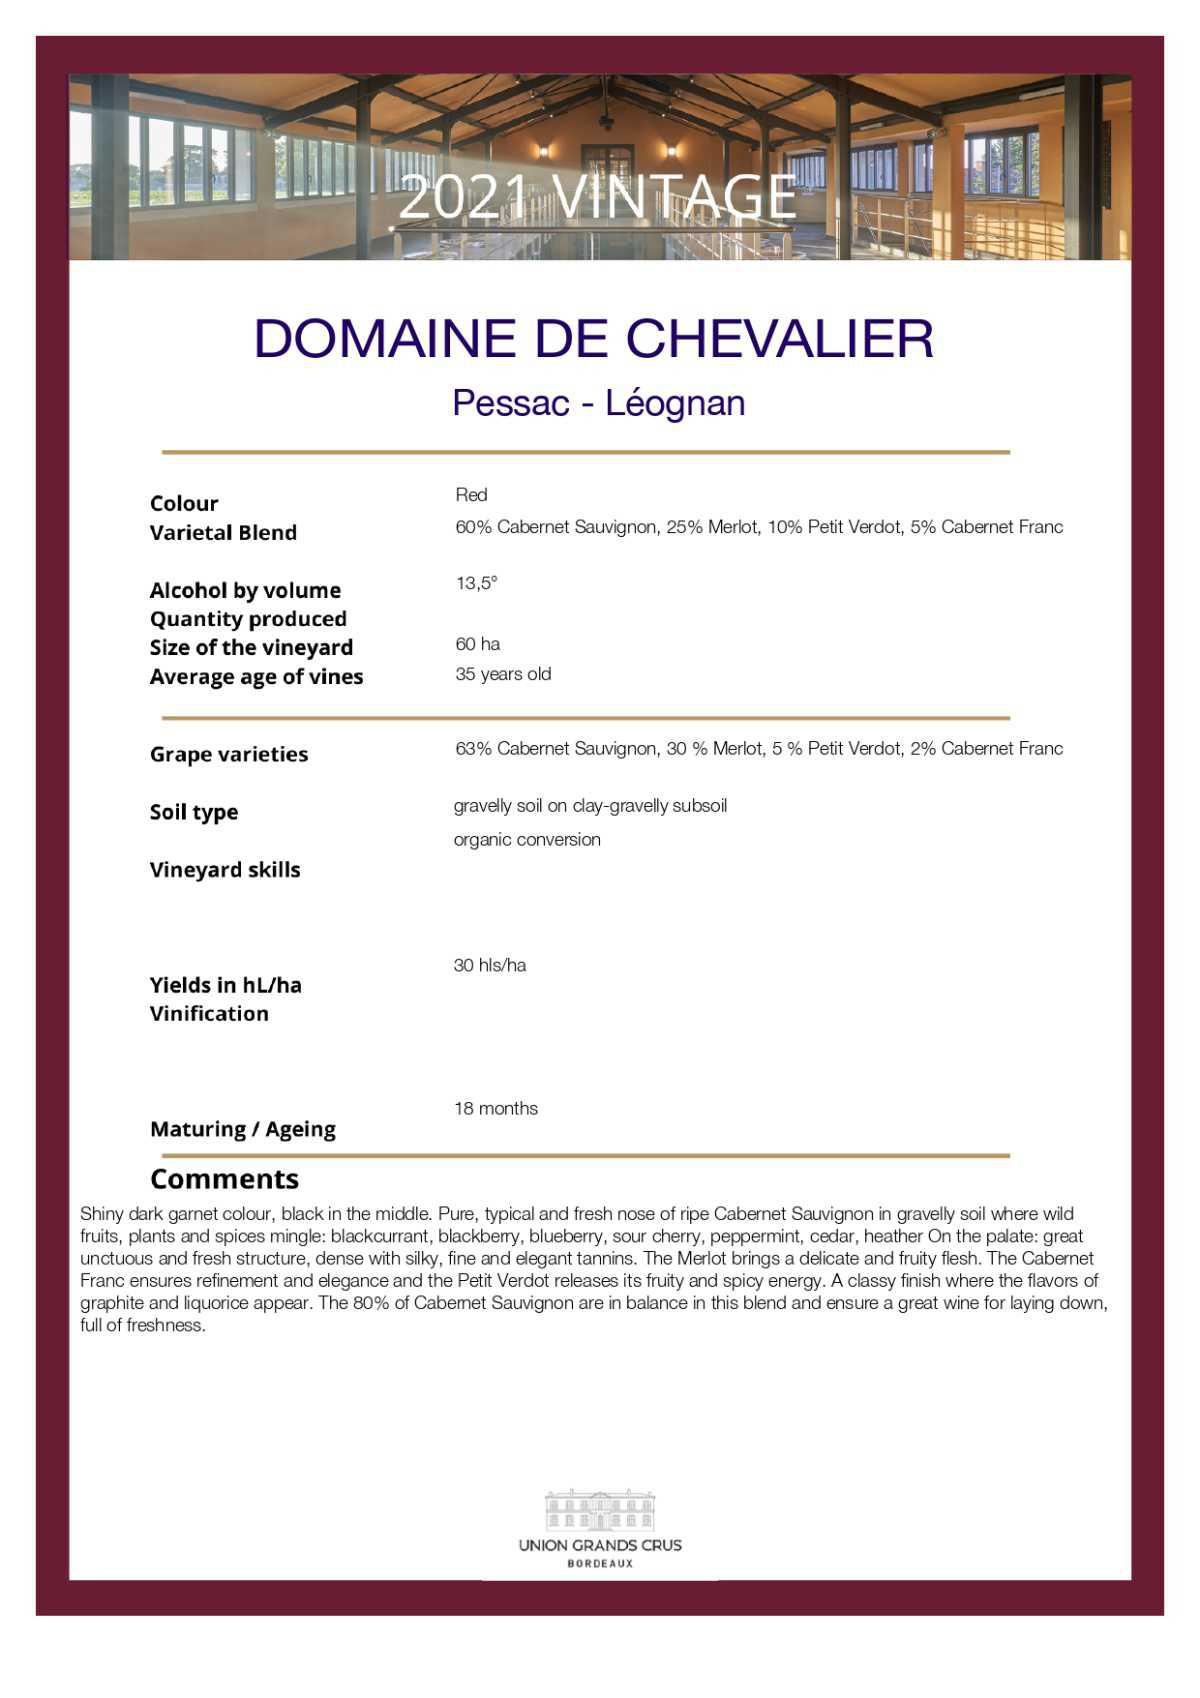 Domaine de Chevalier - Red